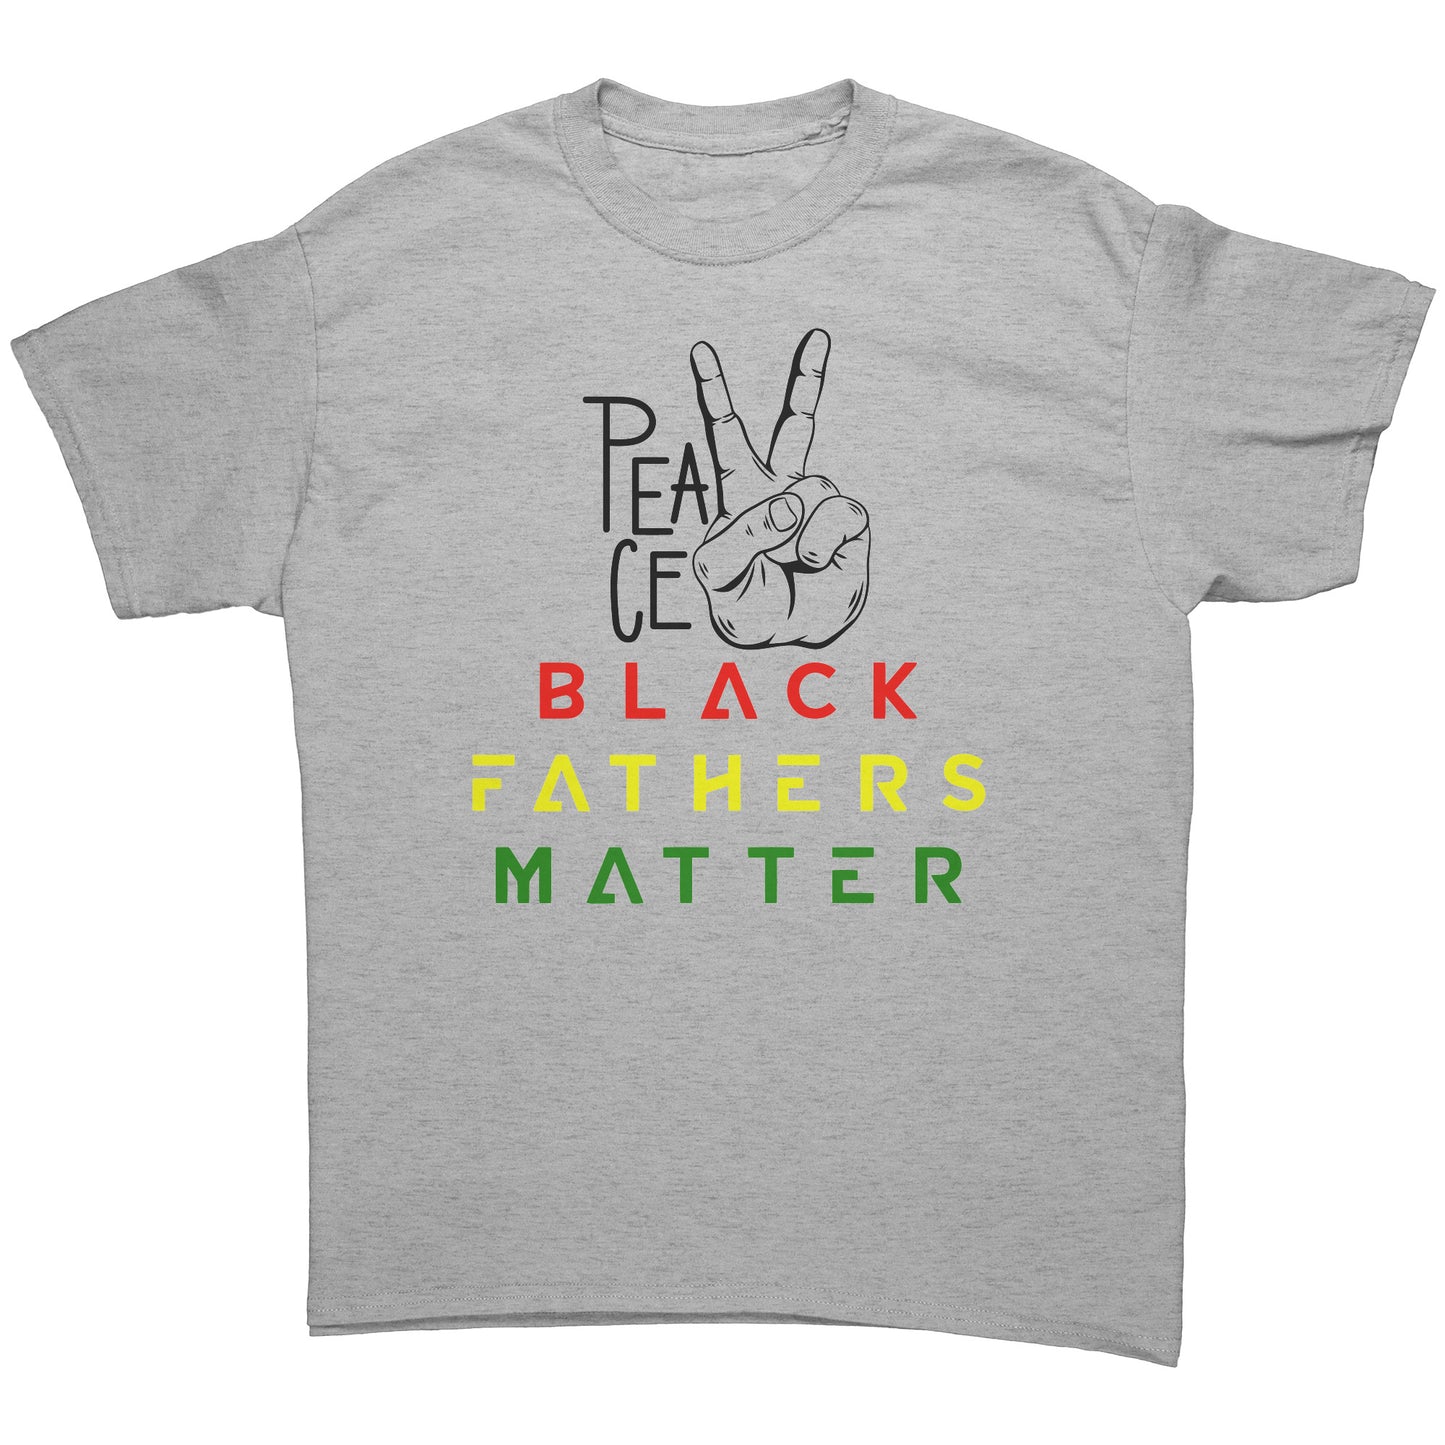 Black Fathers Matter Tee